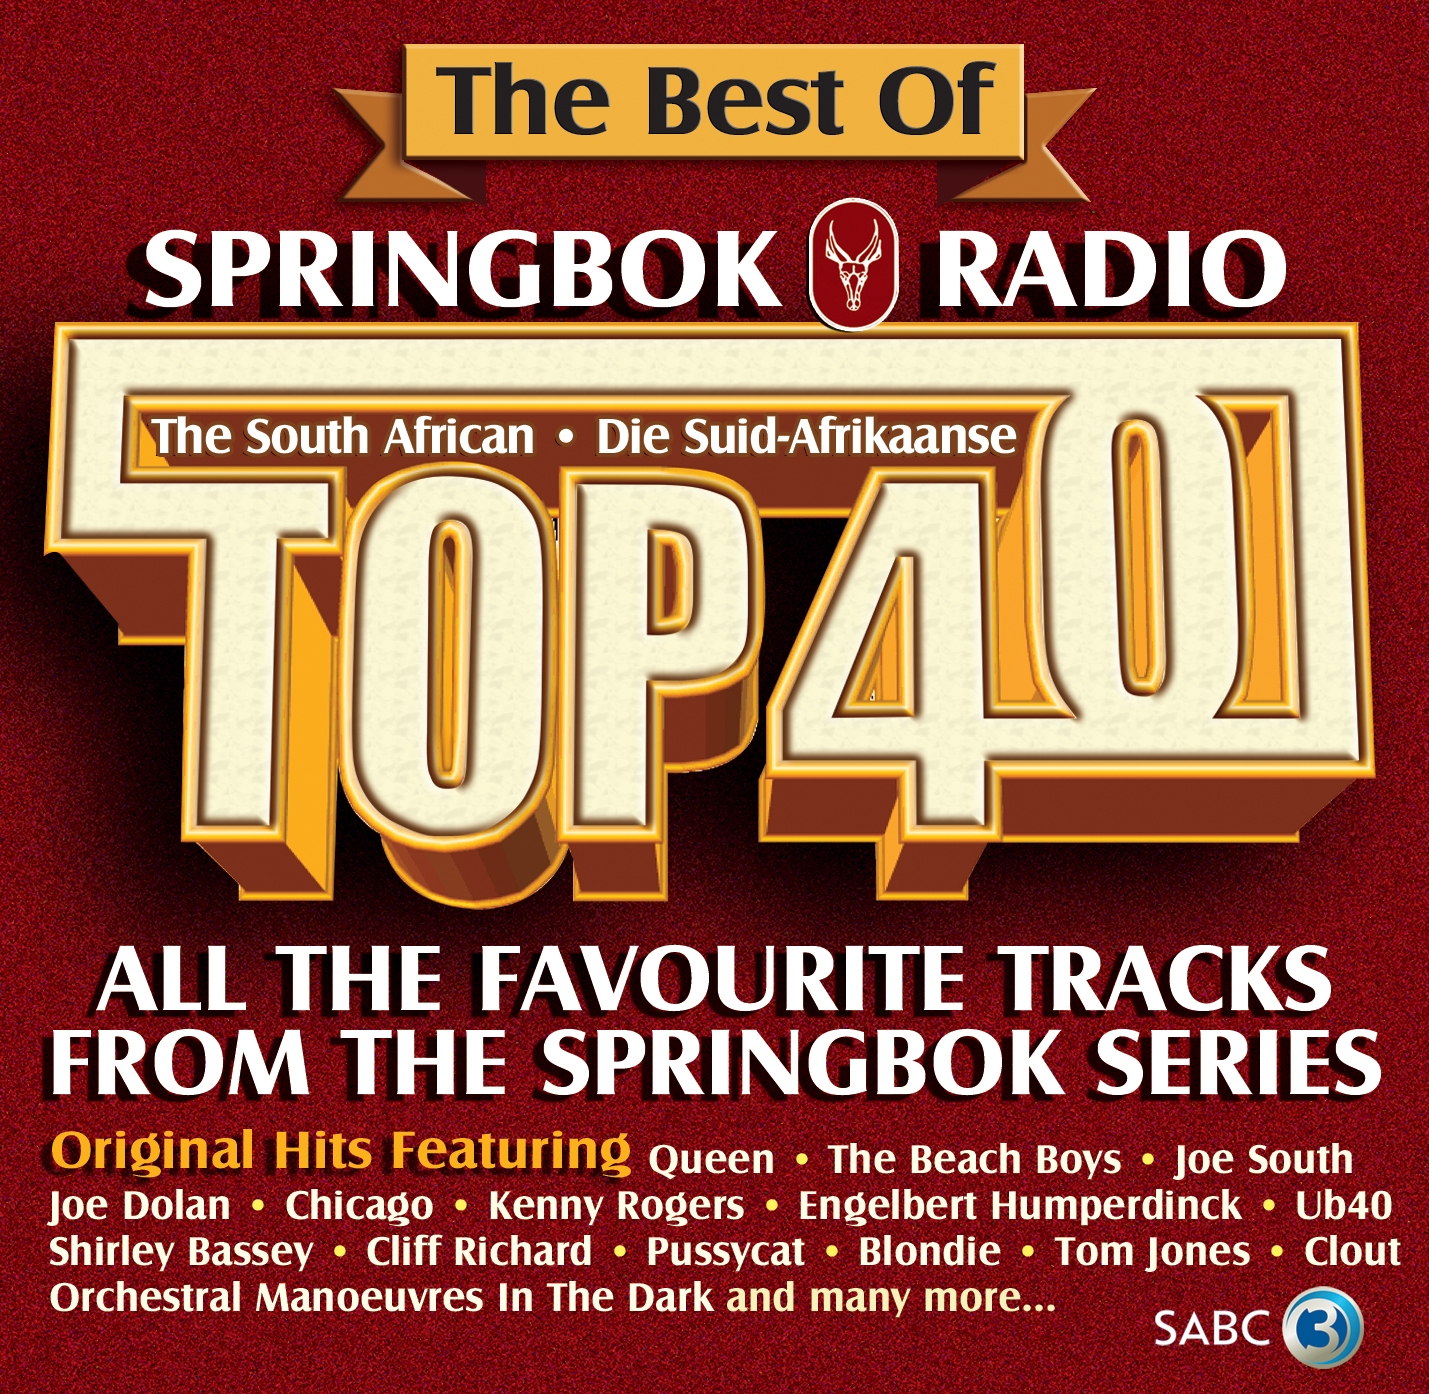 Springbok Radio Top 20 Chart